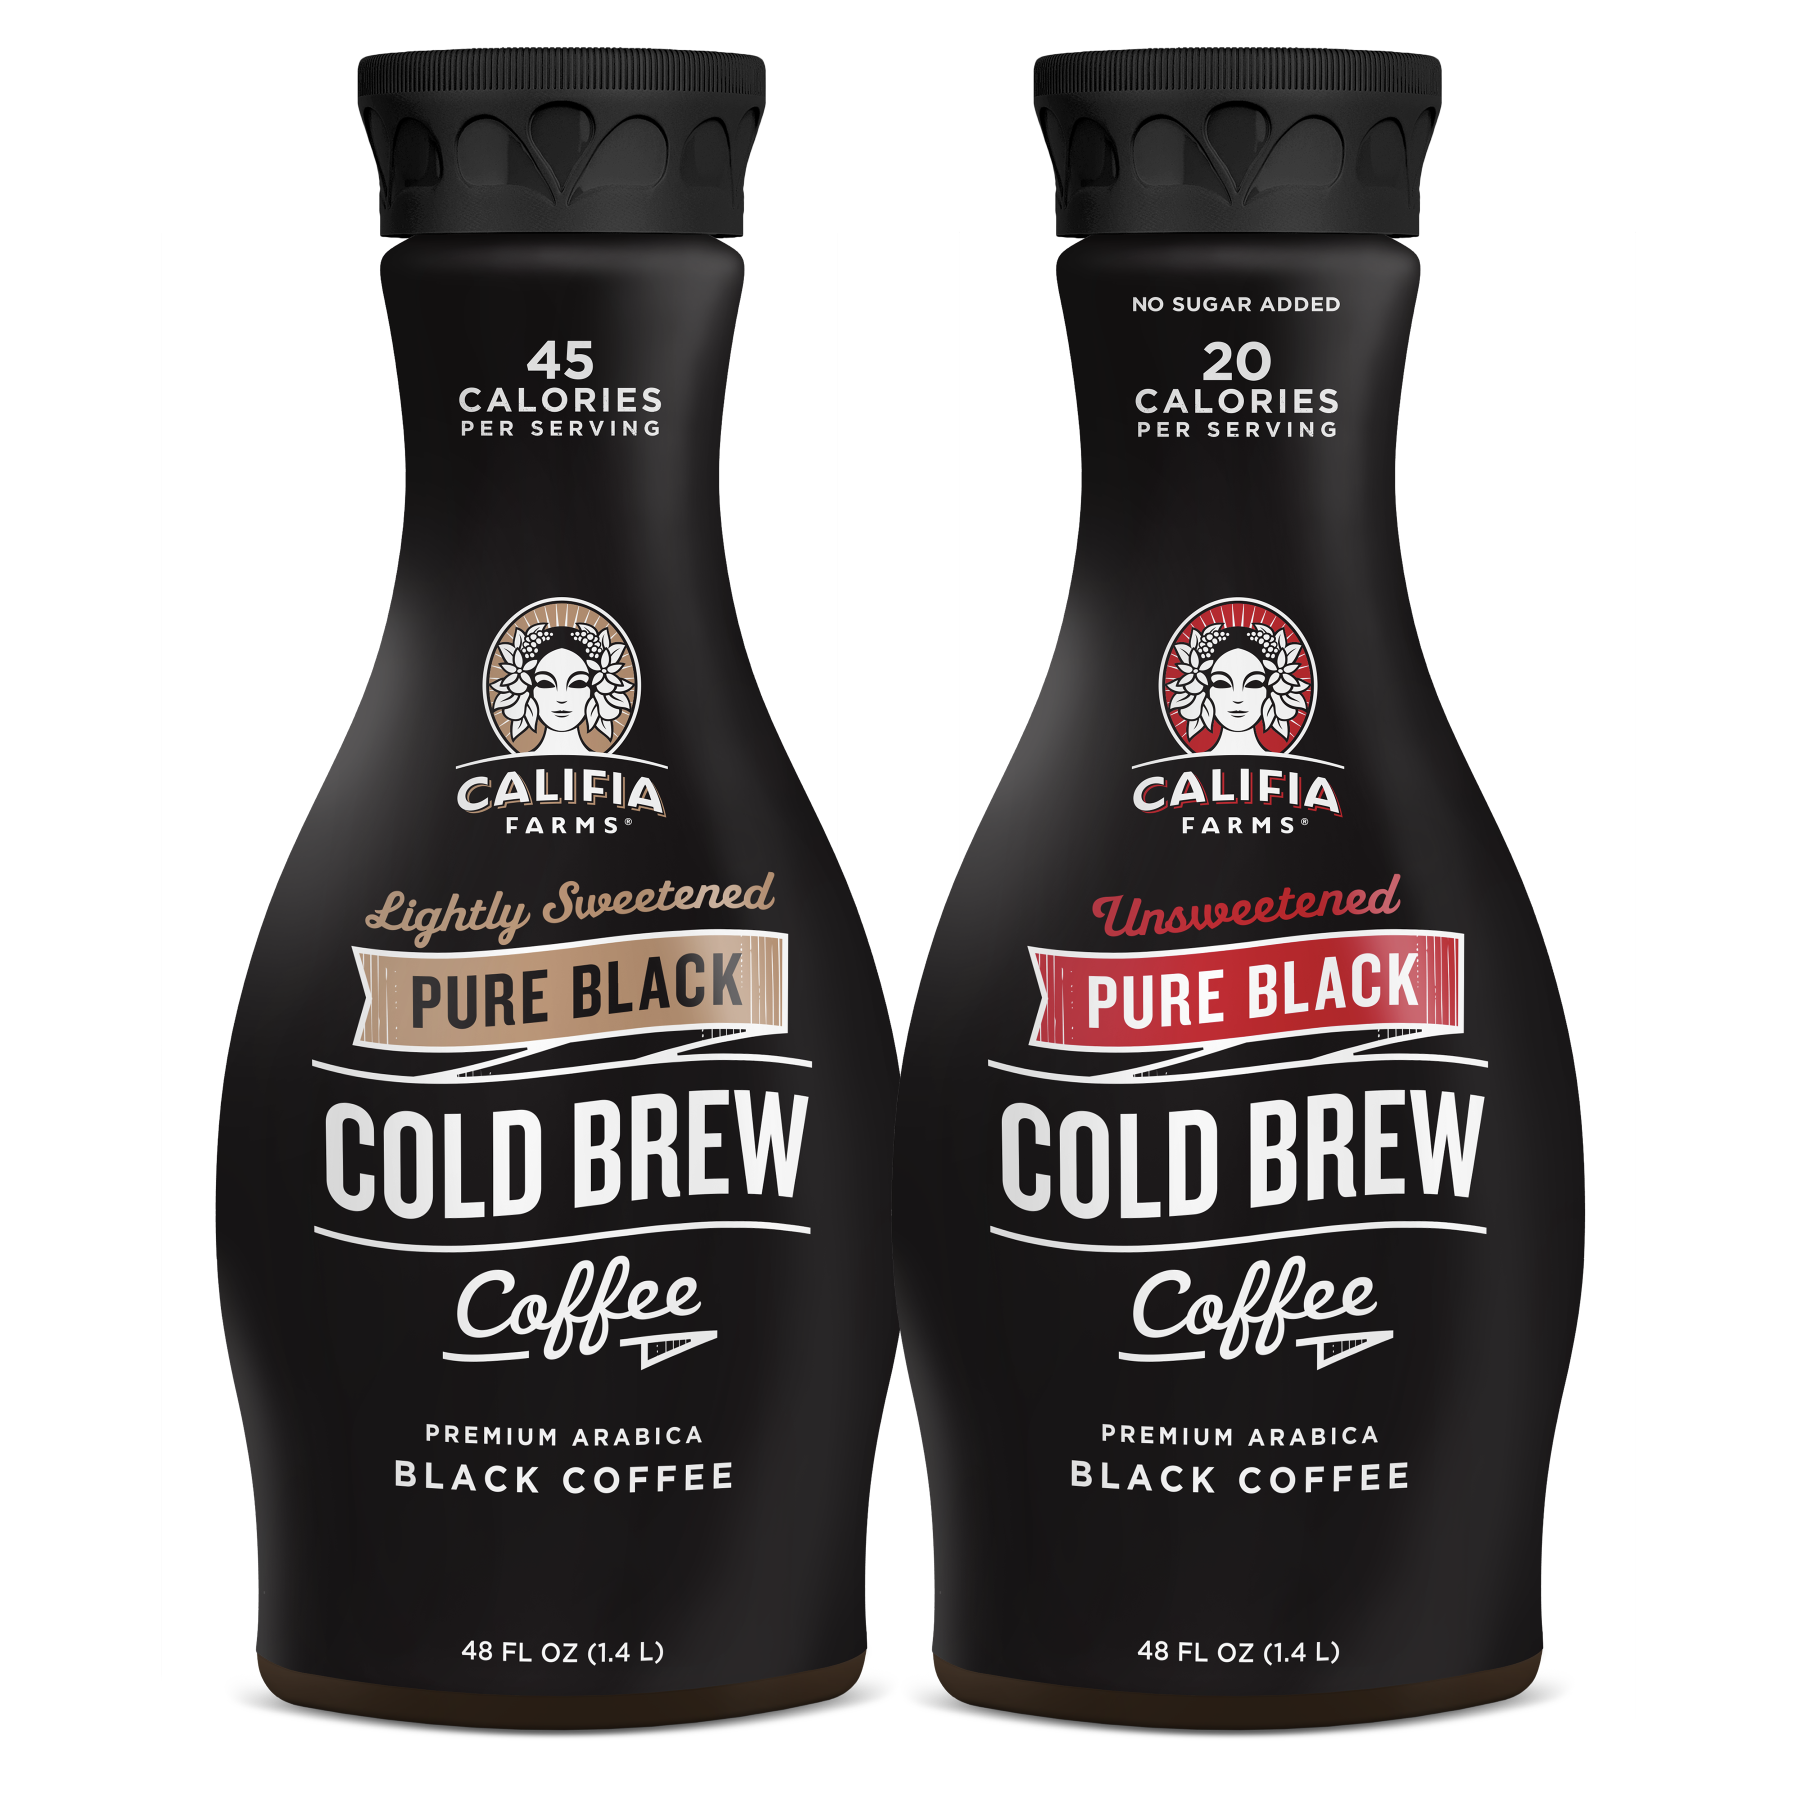 Колд кофе. Кофе Cold Brew. Cold Brew кофе в банках. Егермейстер Cold Brew Coffee. Кофейный концентрат колд Брю.